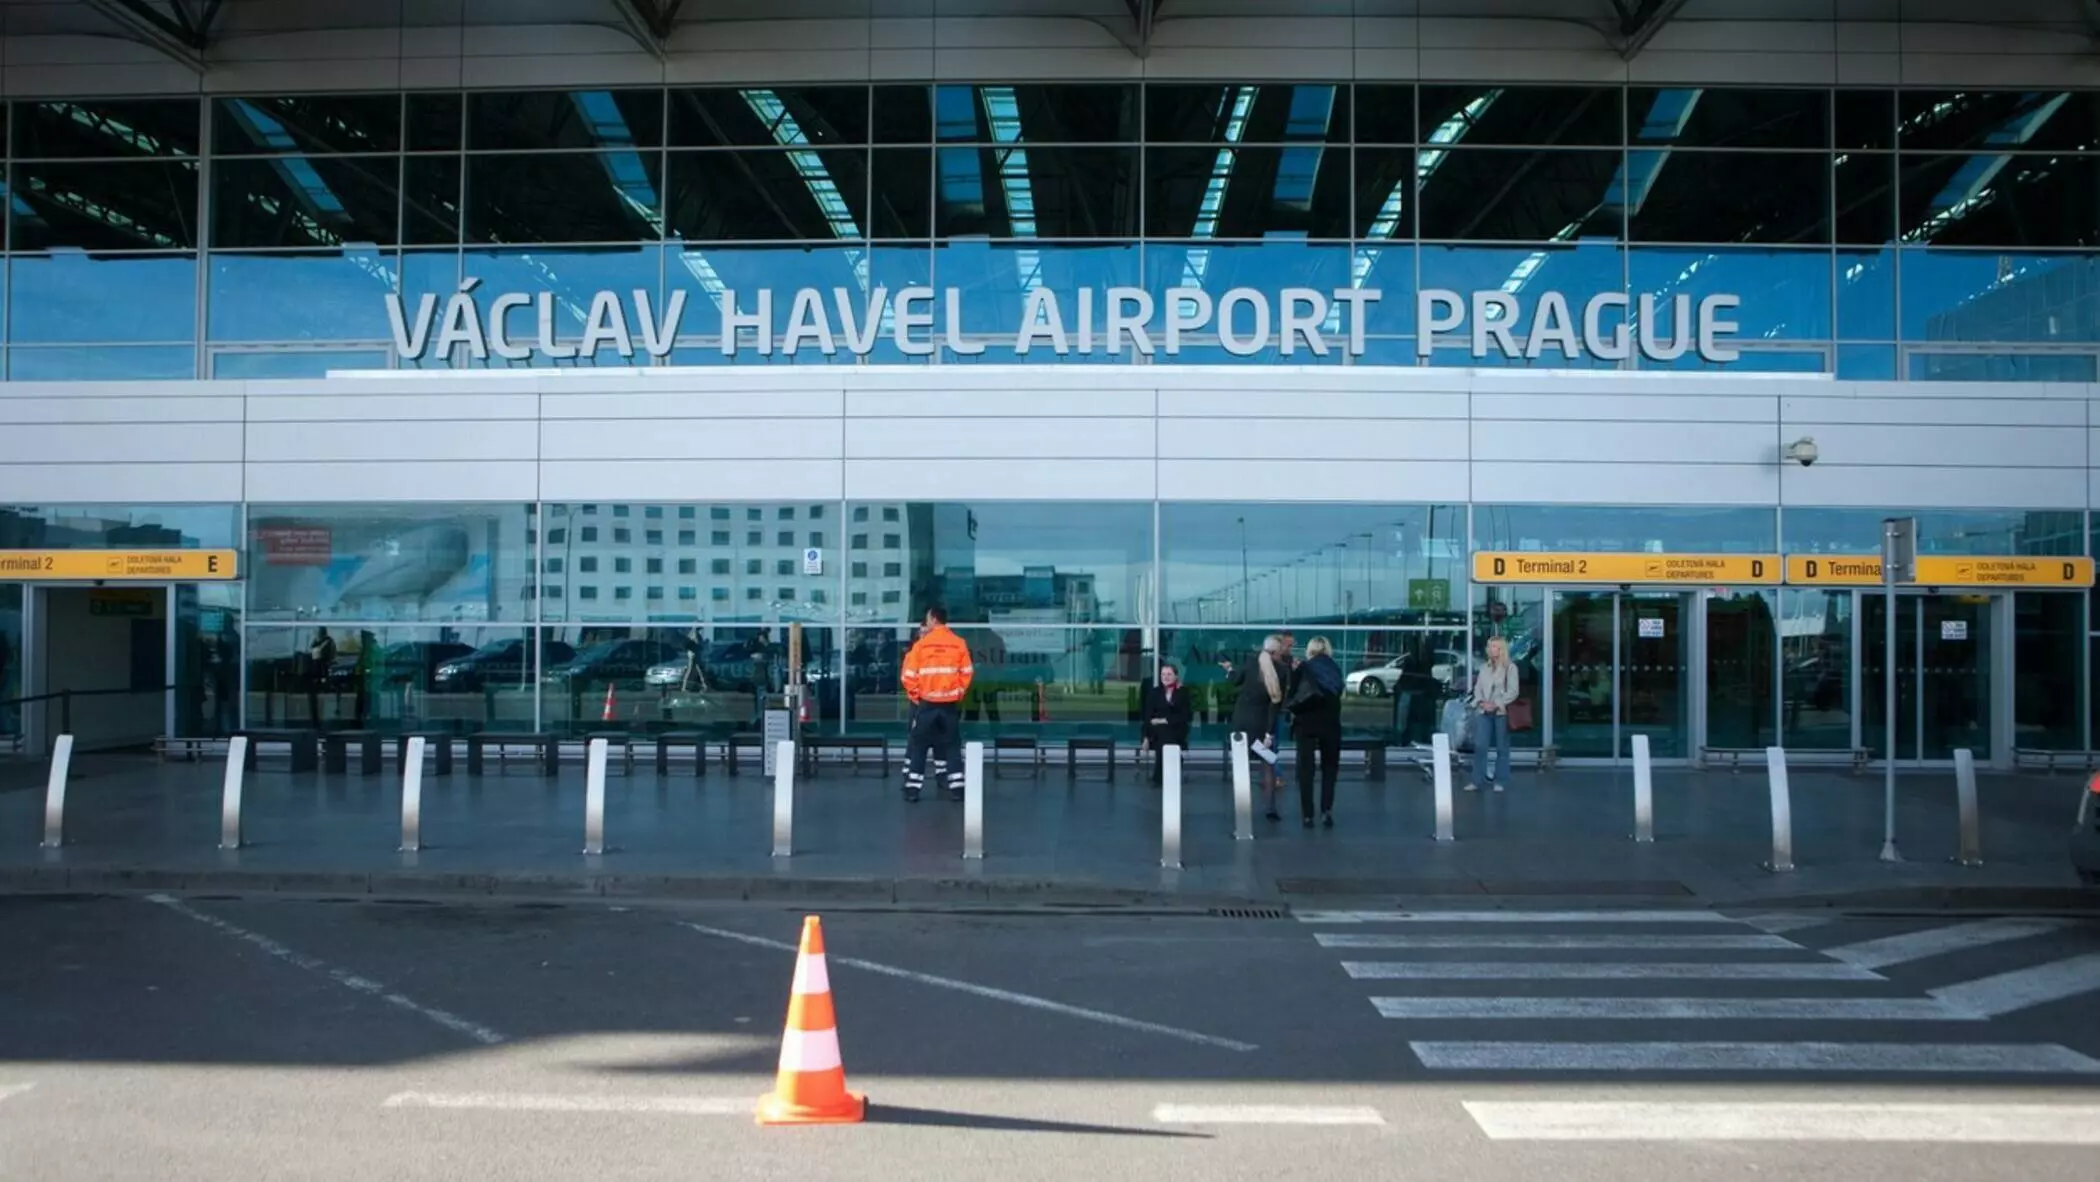 Международный аэропорт прага имени вацлава гавела